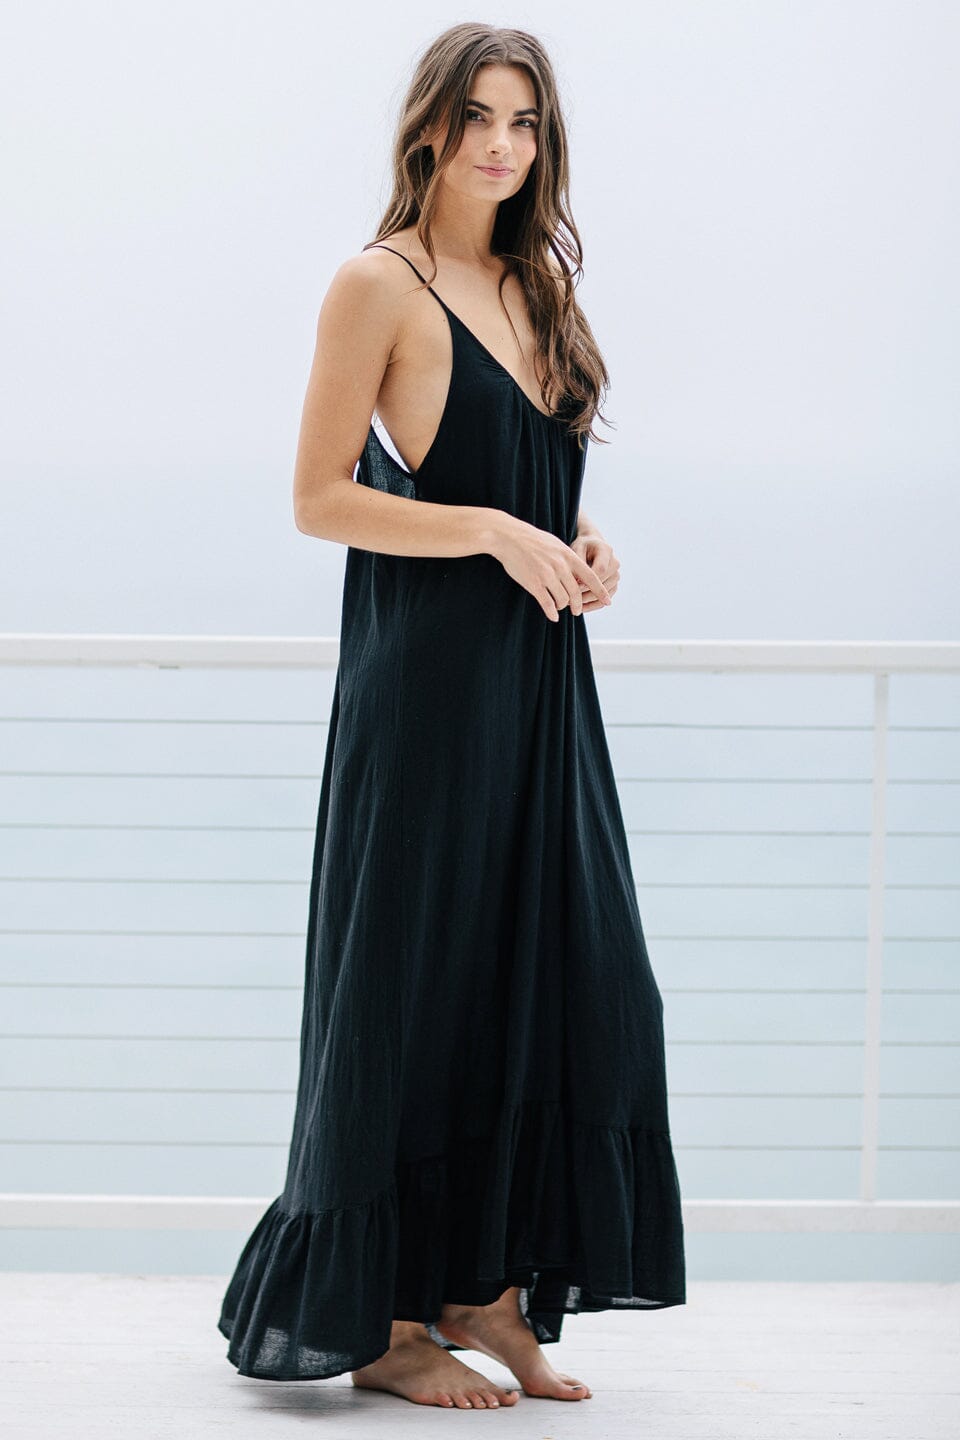 9seed - Paloma Dress black - Réjane Rosenberger Design